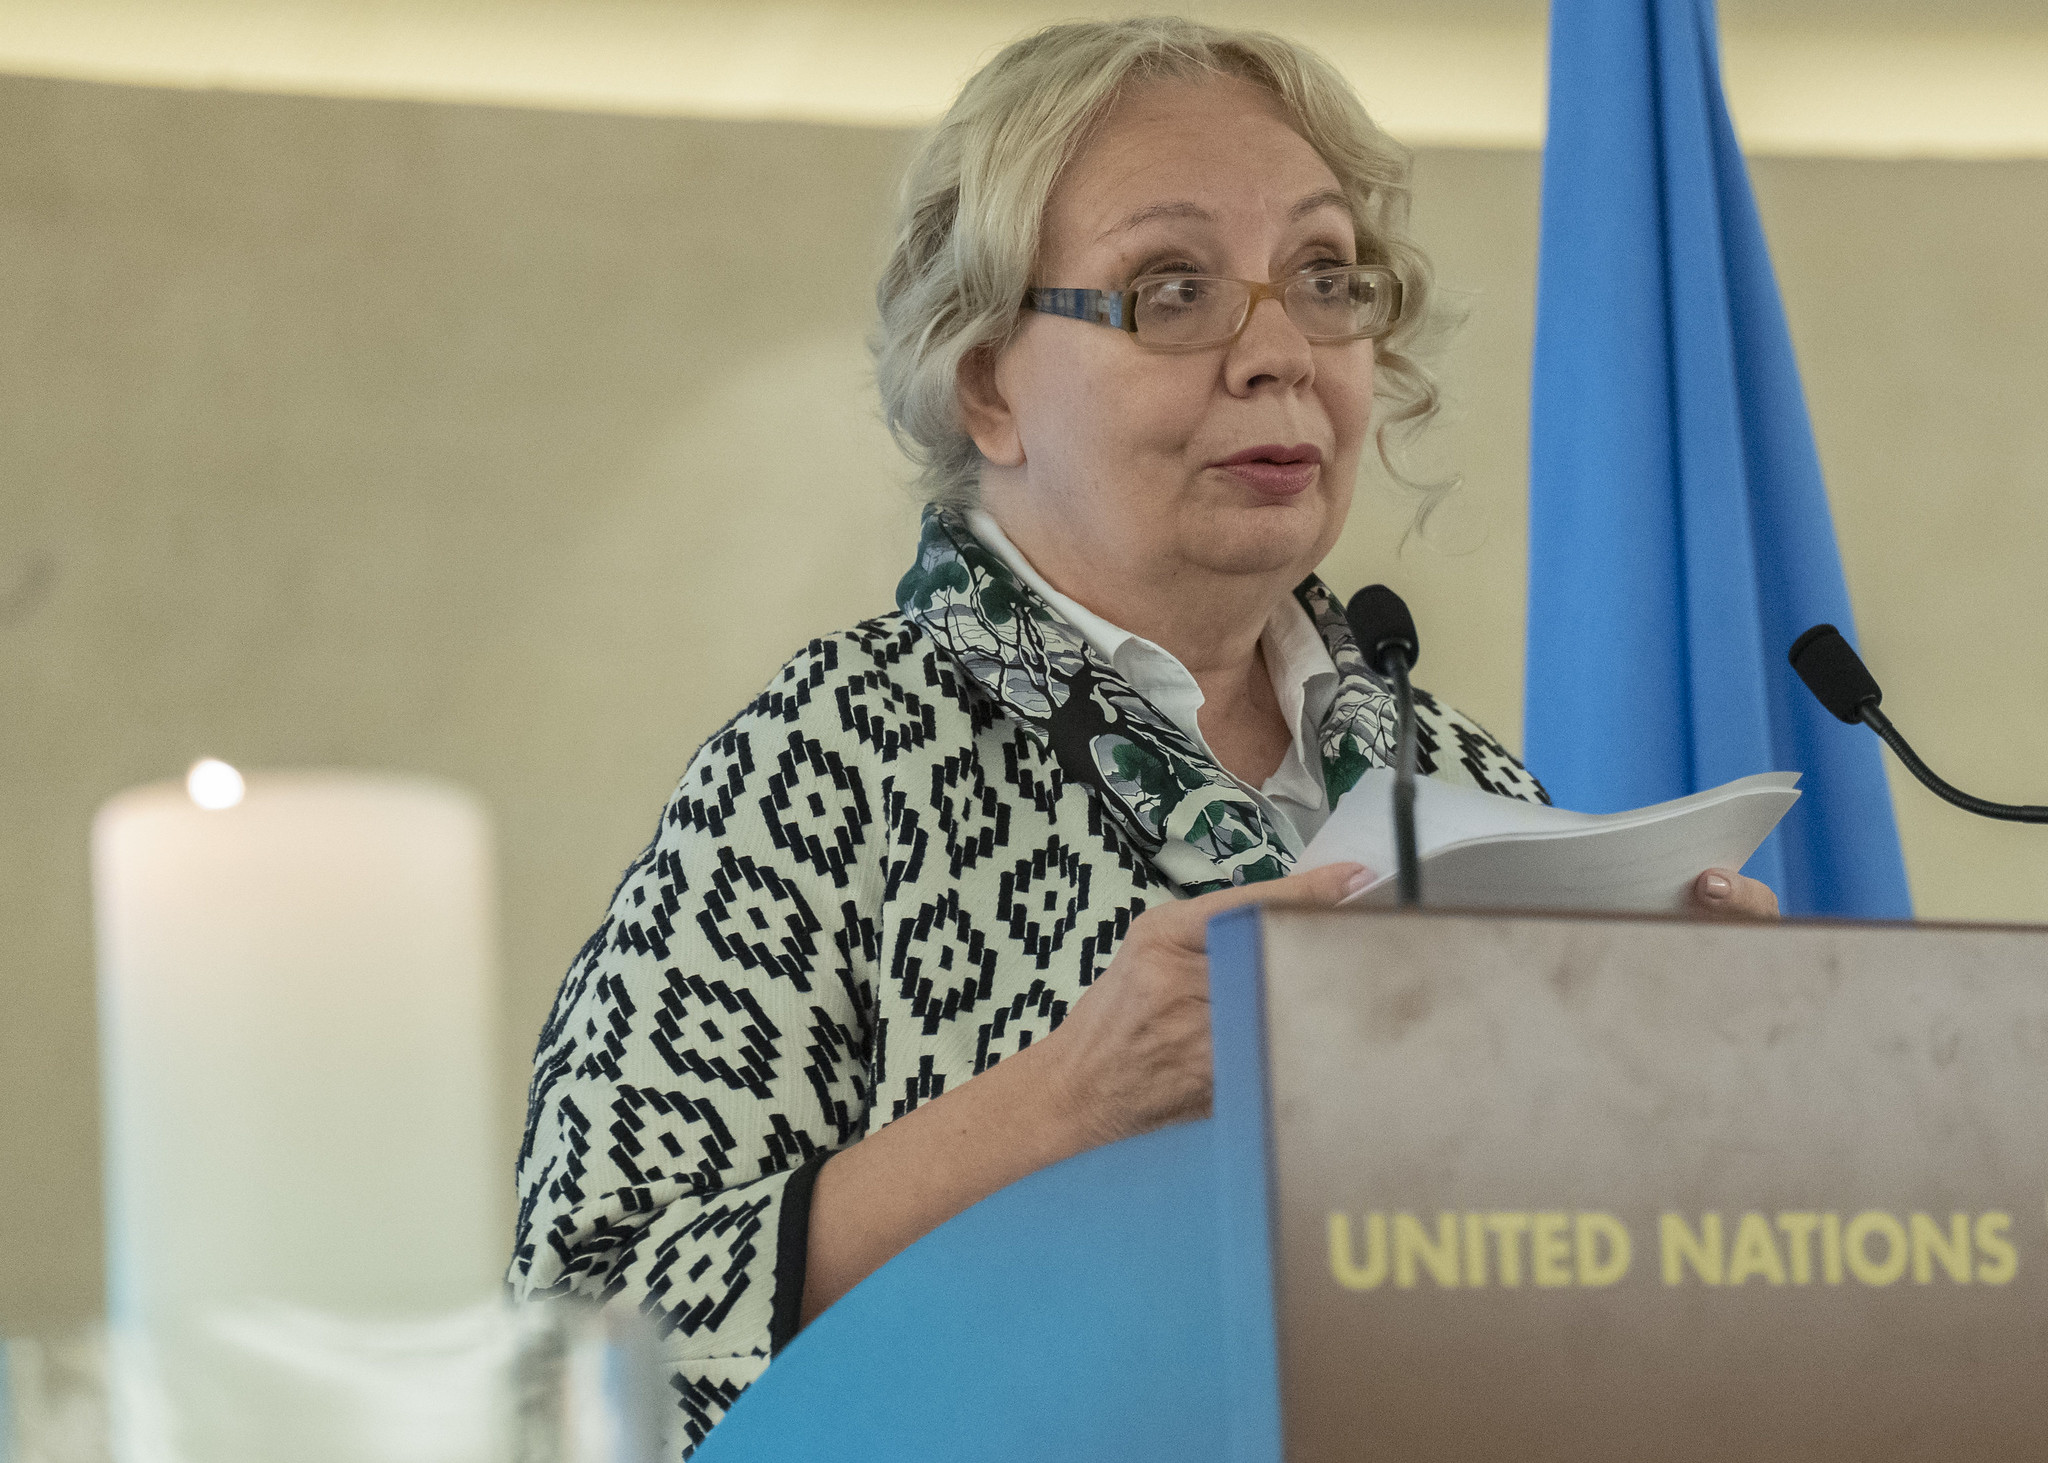 Tatiana Valovaya, Director-General of the United Nations Office at Genevai during World Humanitarian Day. 19 August 2019.